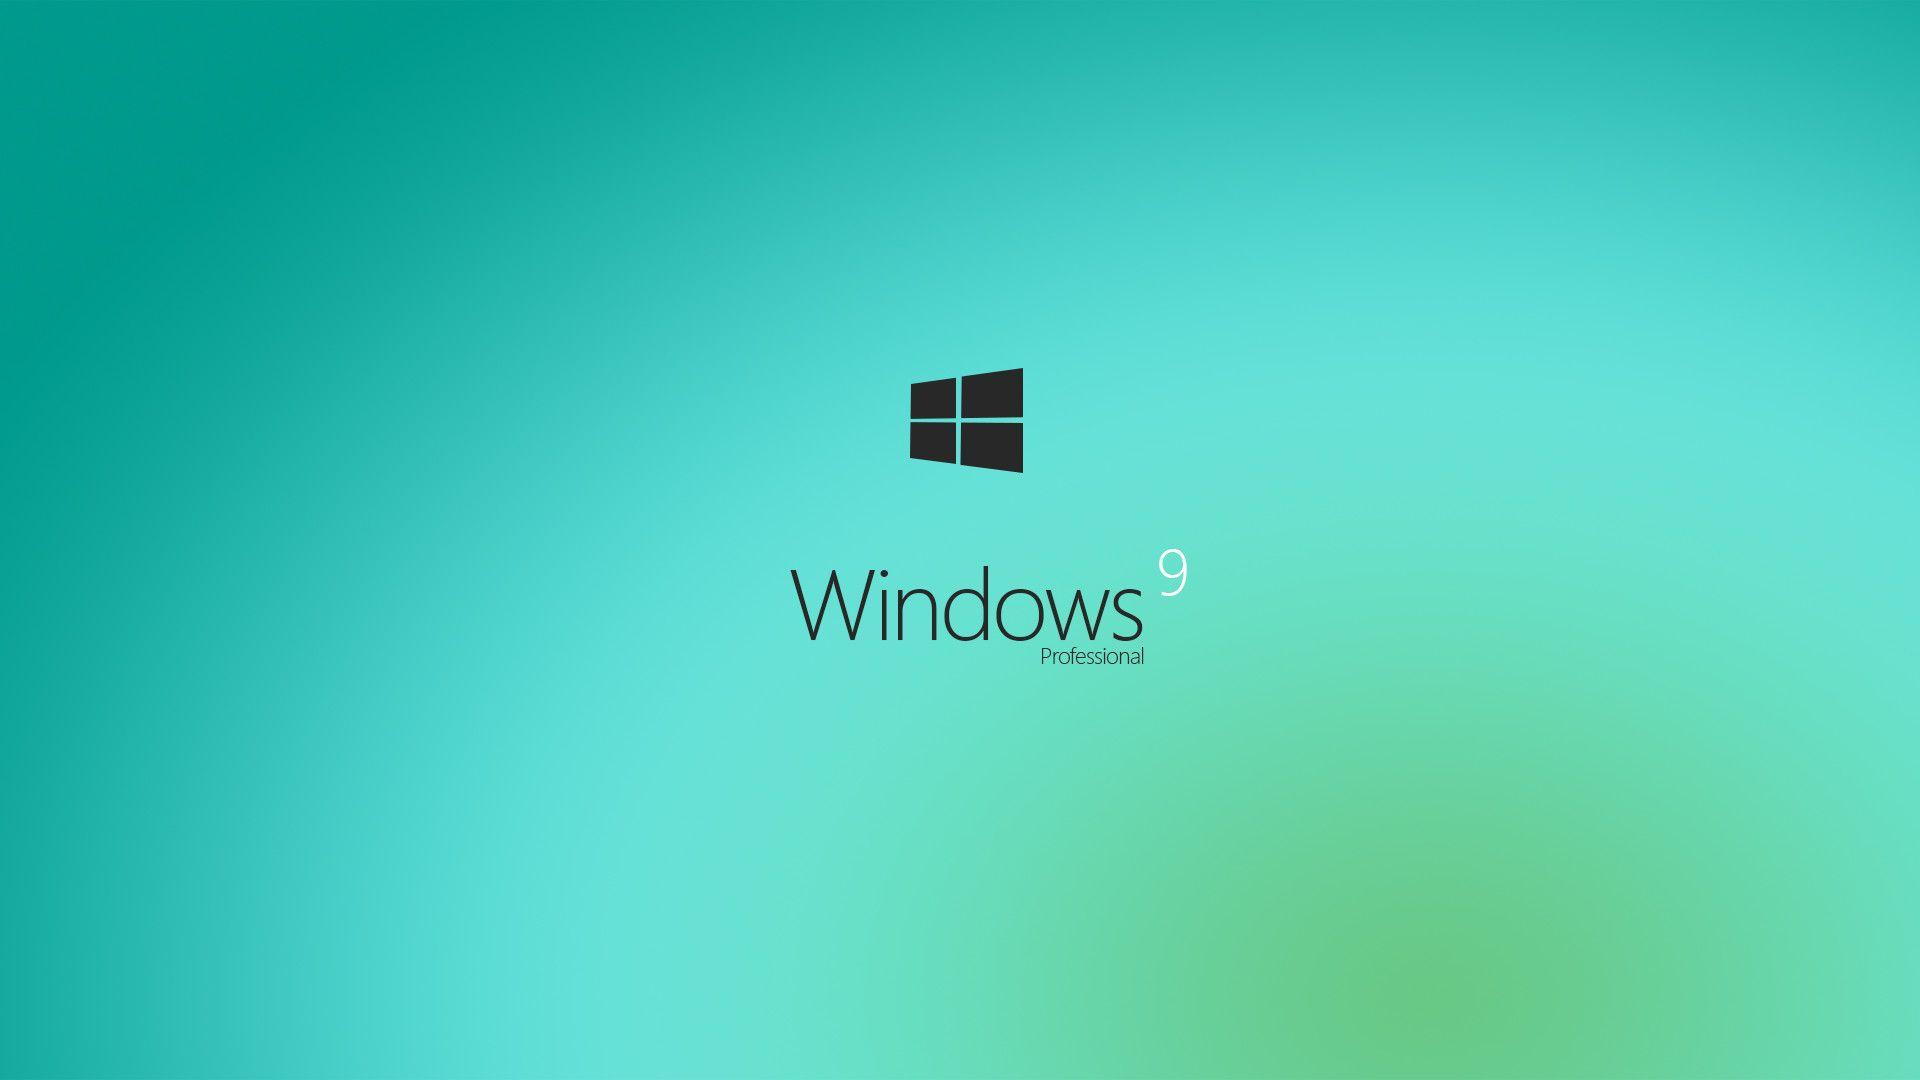 Red Abstract Windows 1.0 Logo - Best Free Windows 1.0 Wallpaper